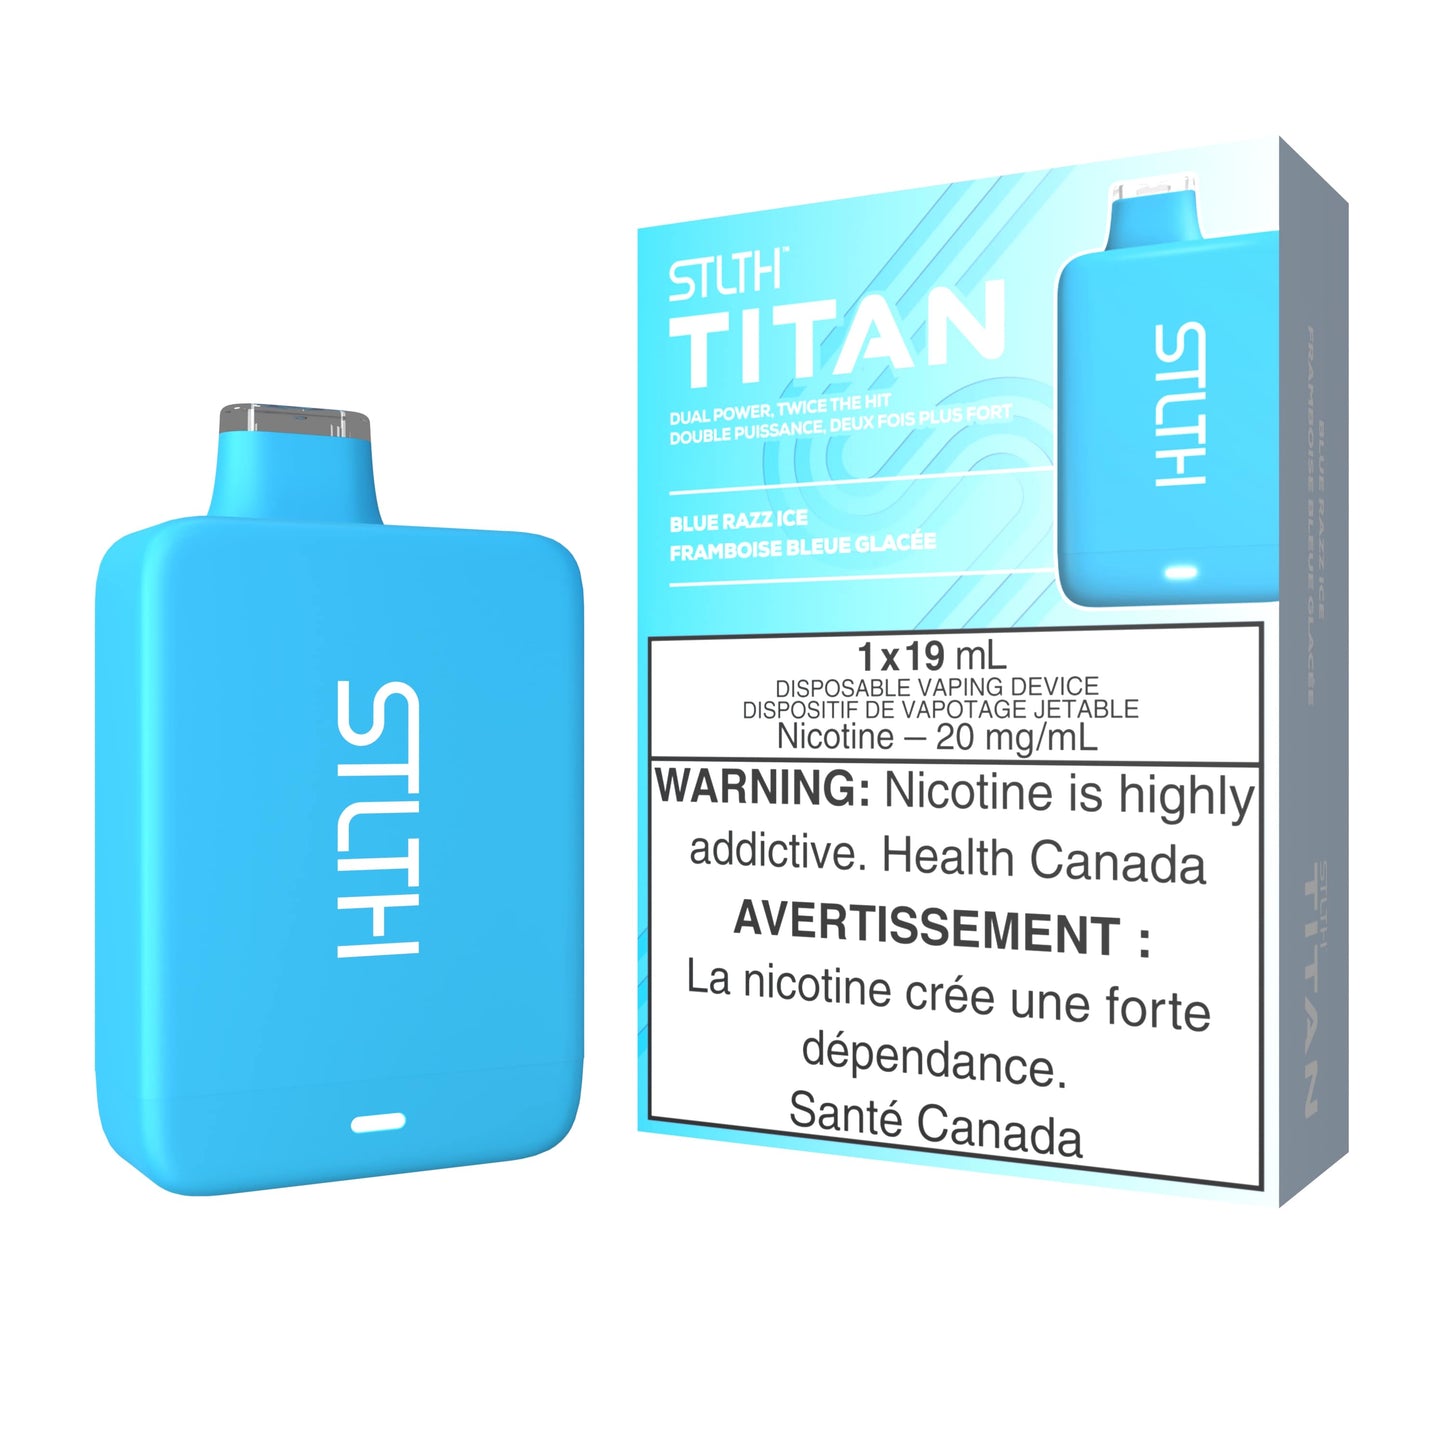 STLTH Titan - Blue Razz Ice (Pack of 5)